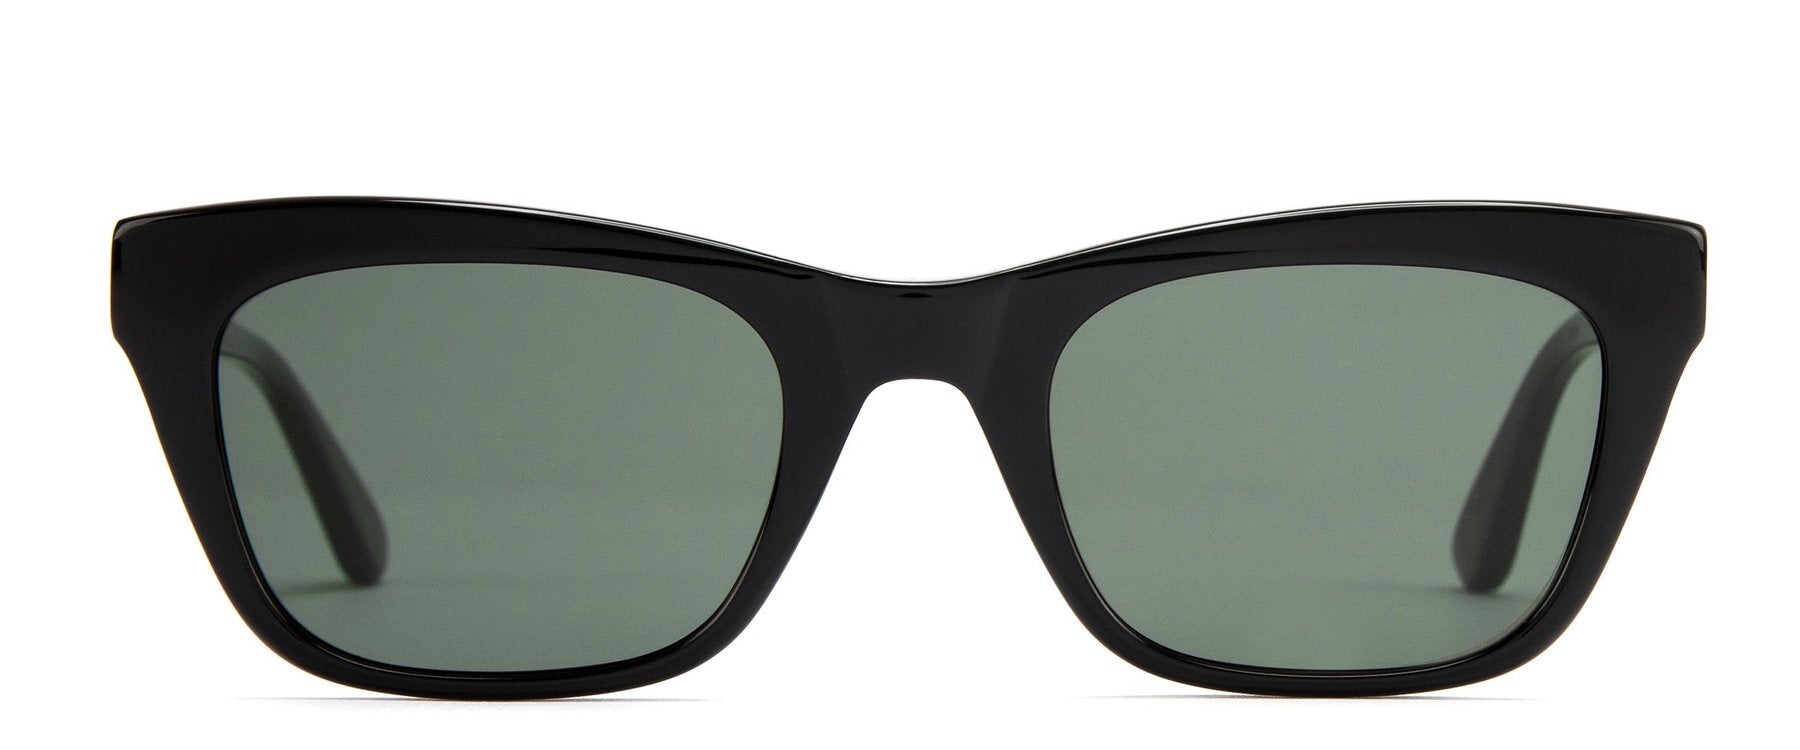 Otis Lyla Polarized Sunglasses Black Green CatEye